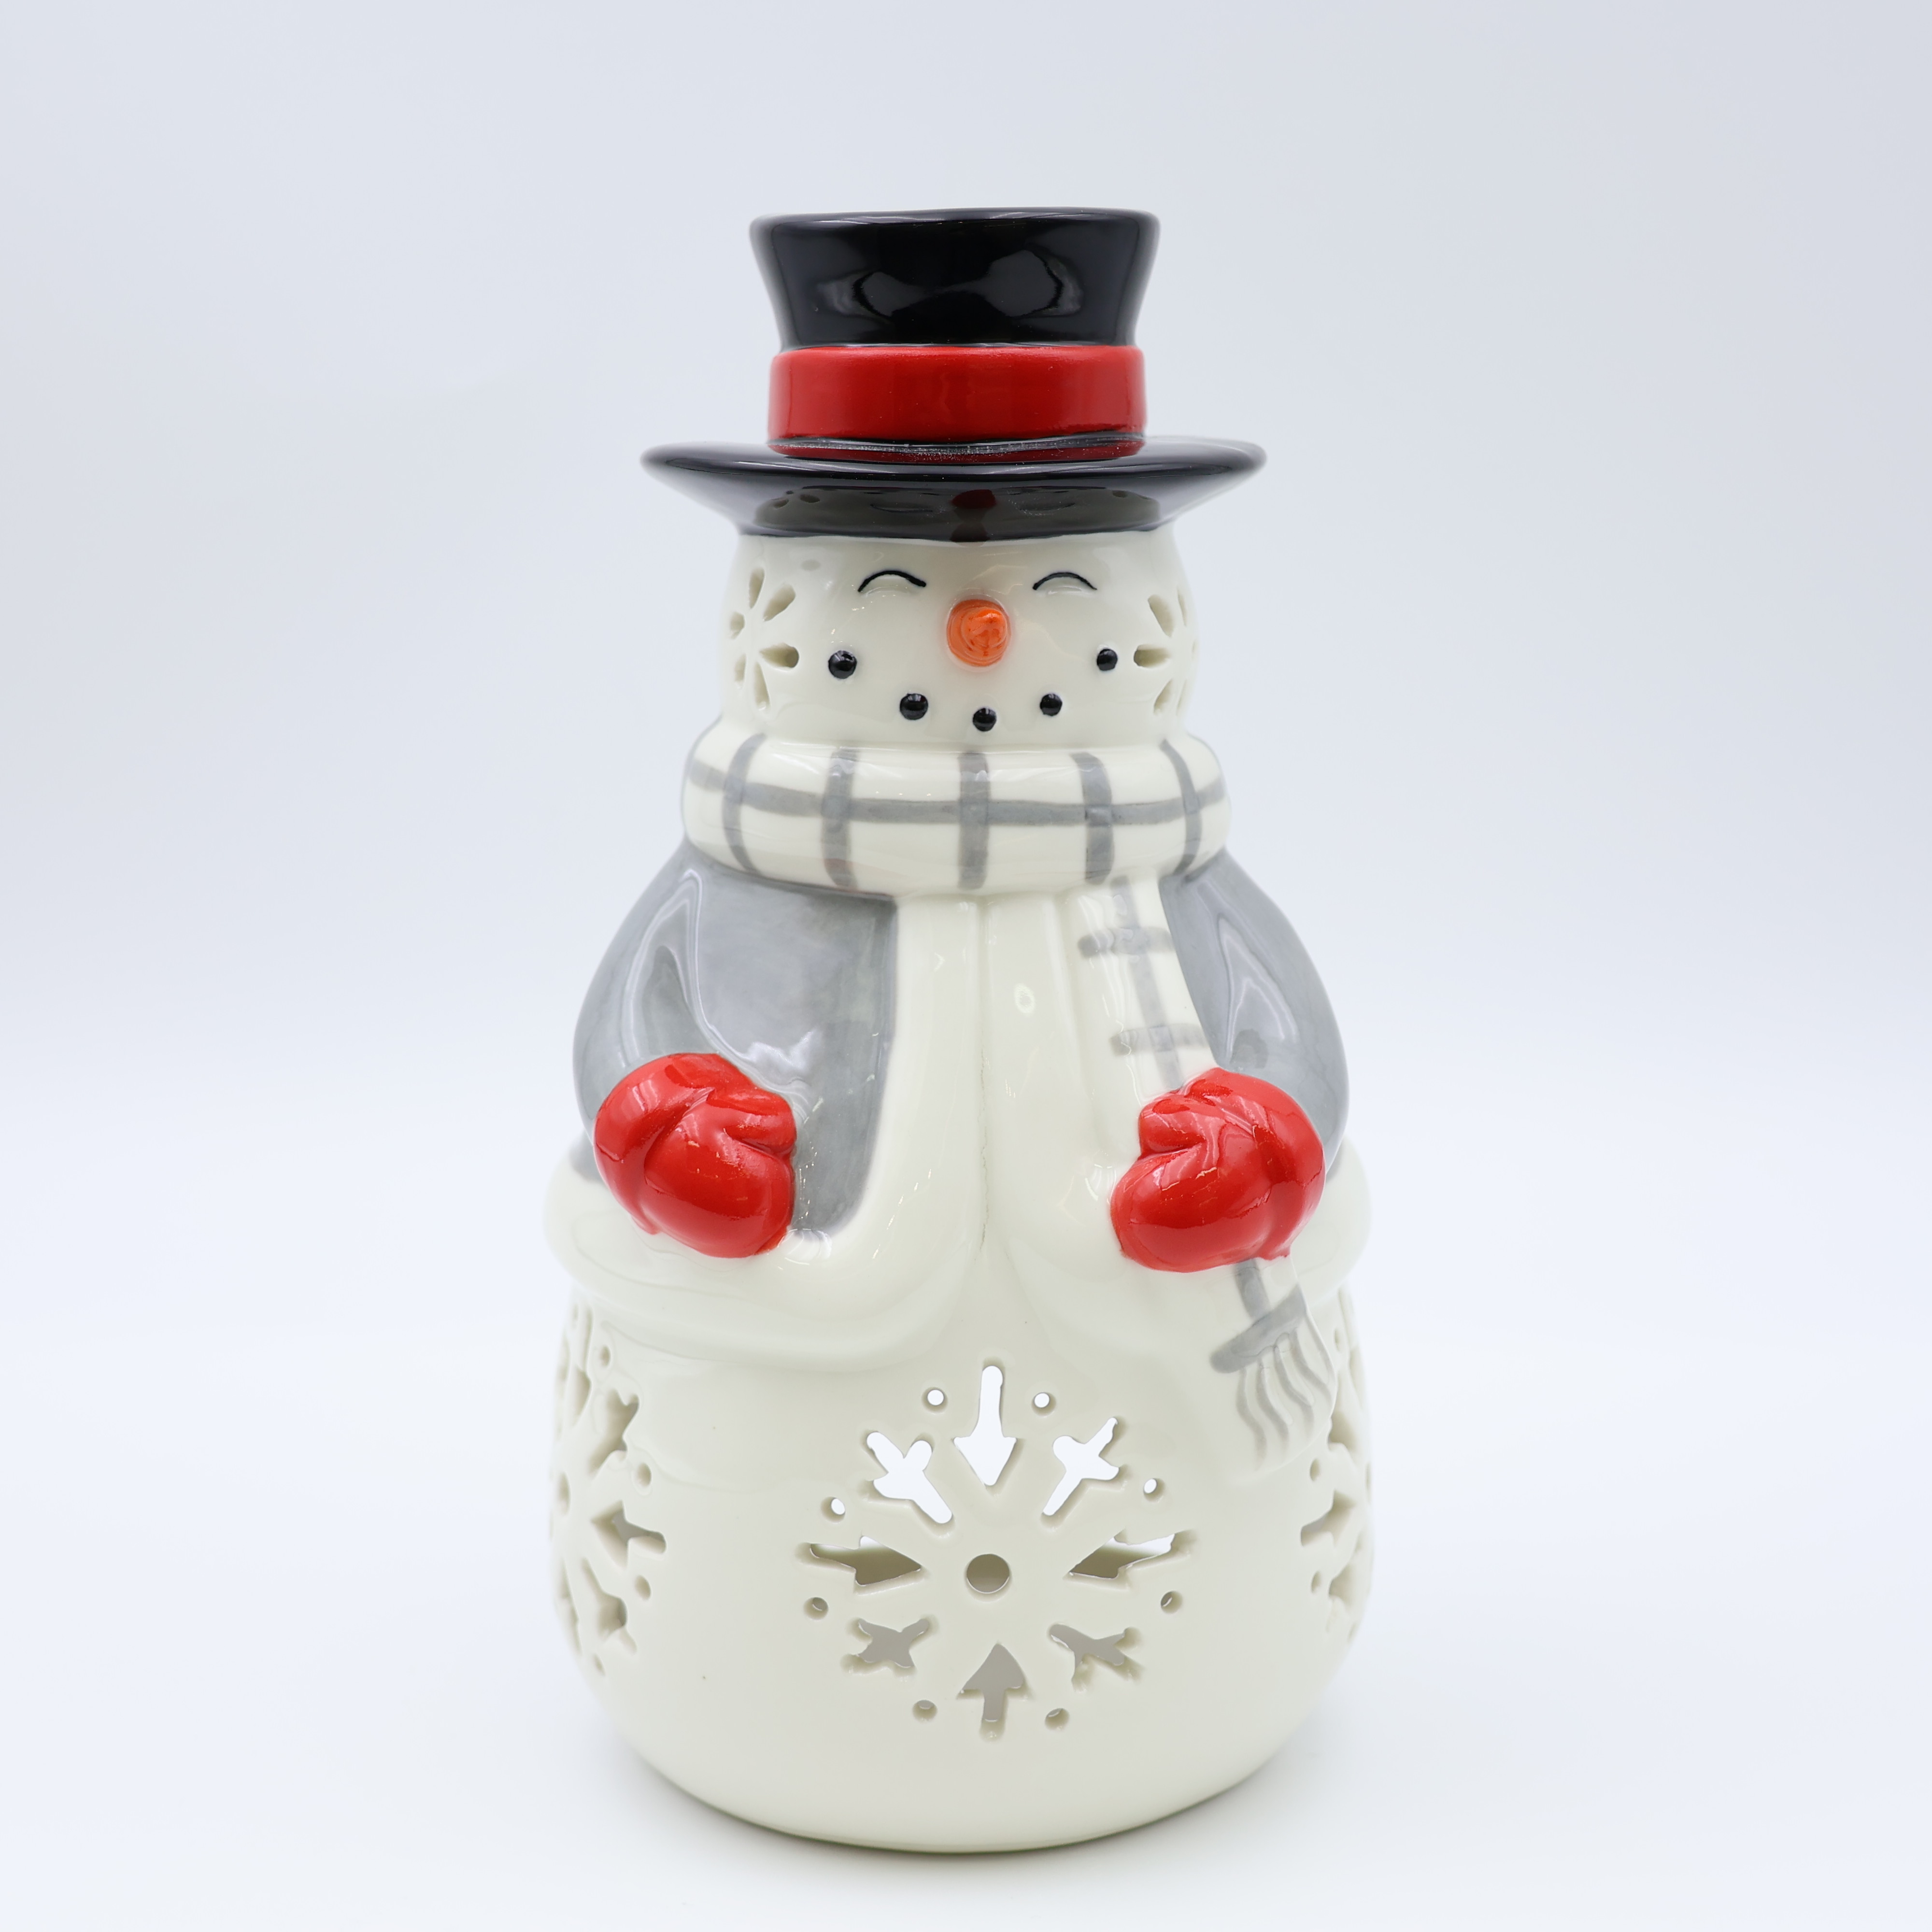 Ċeramika tal-Milied Snowman Tealight Holder Candle Lantern